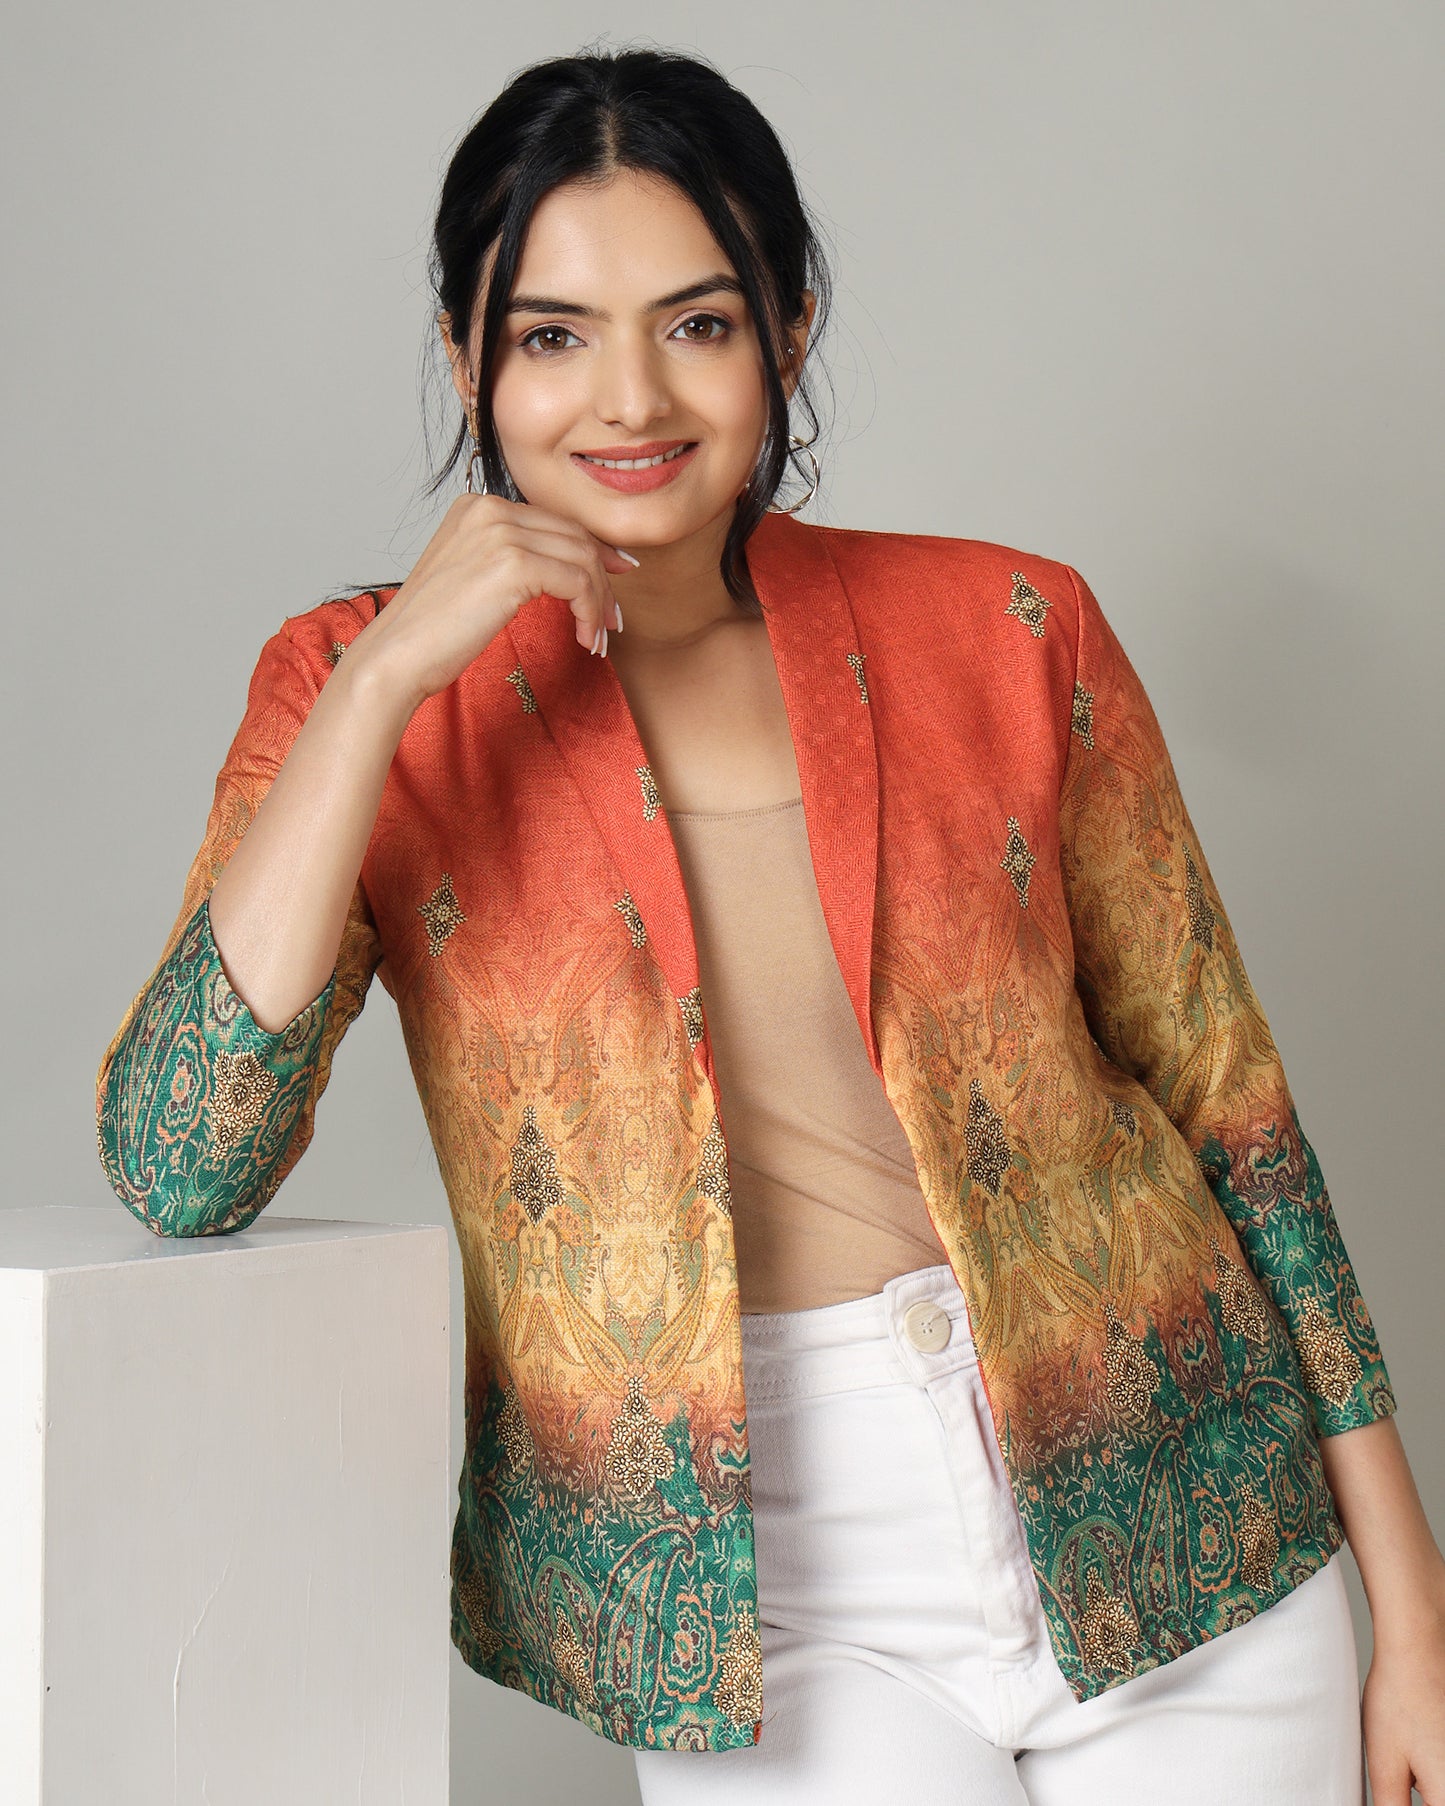 Exclusively Unique Designed Ethnic Women's Jacket